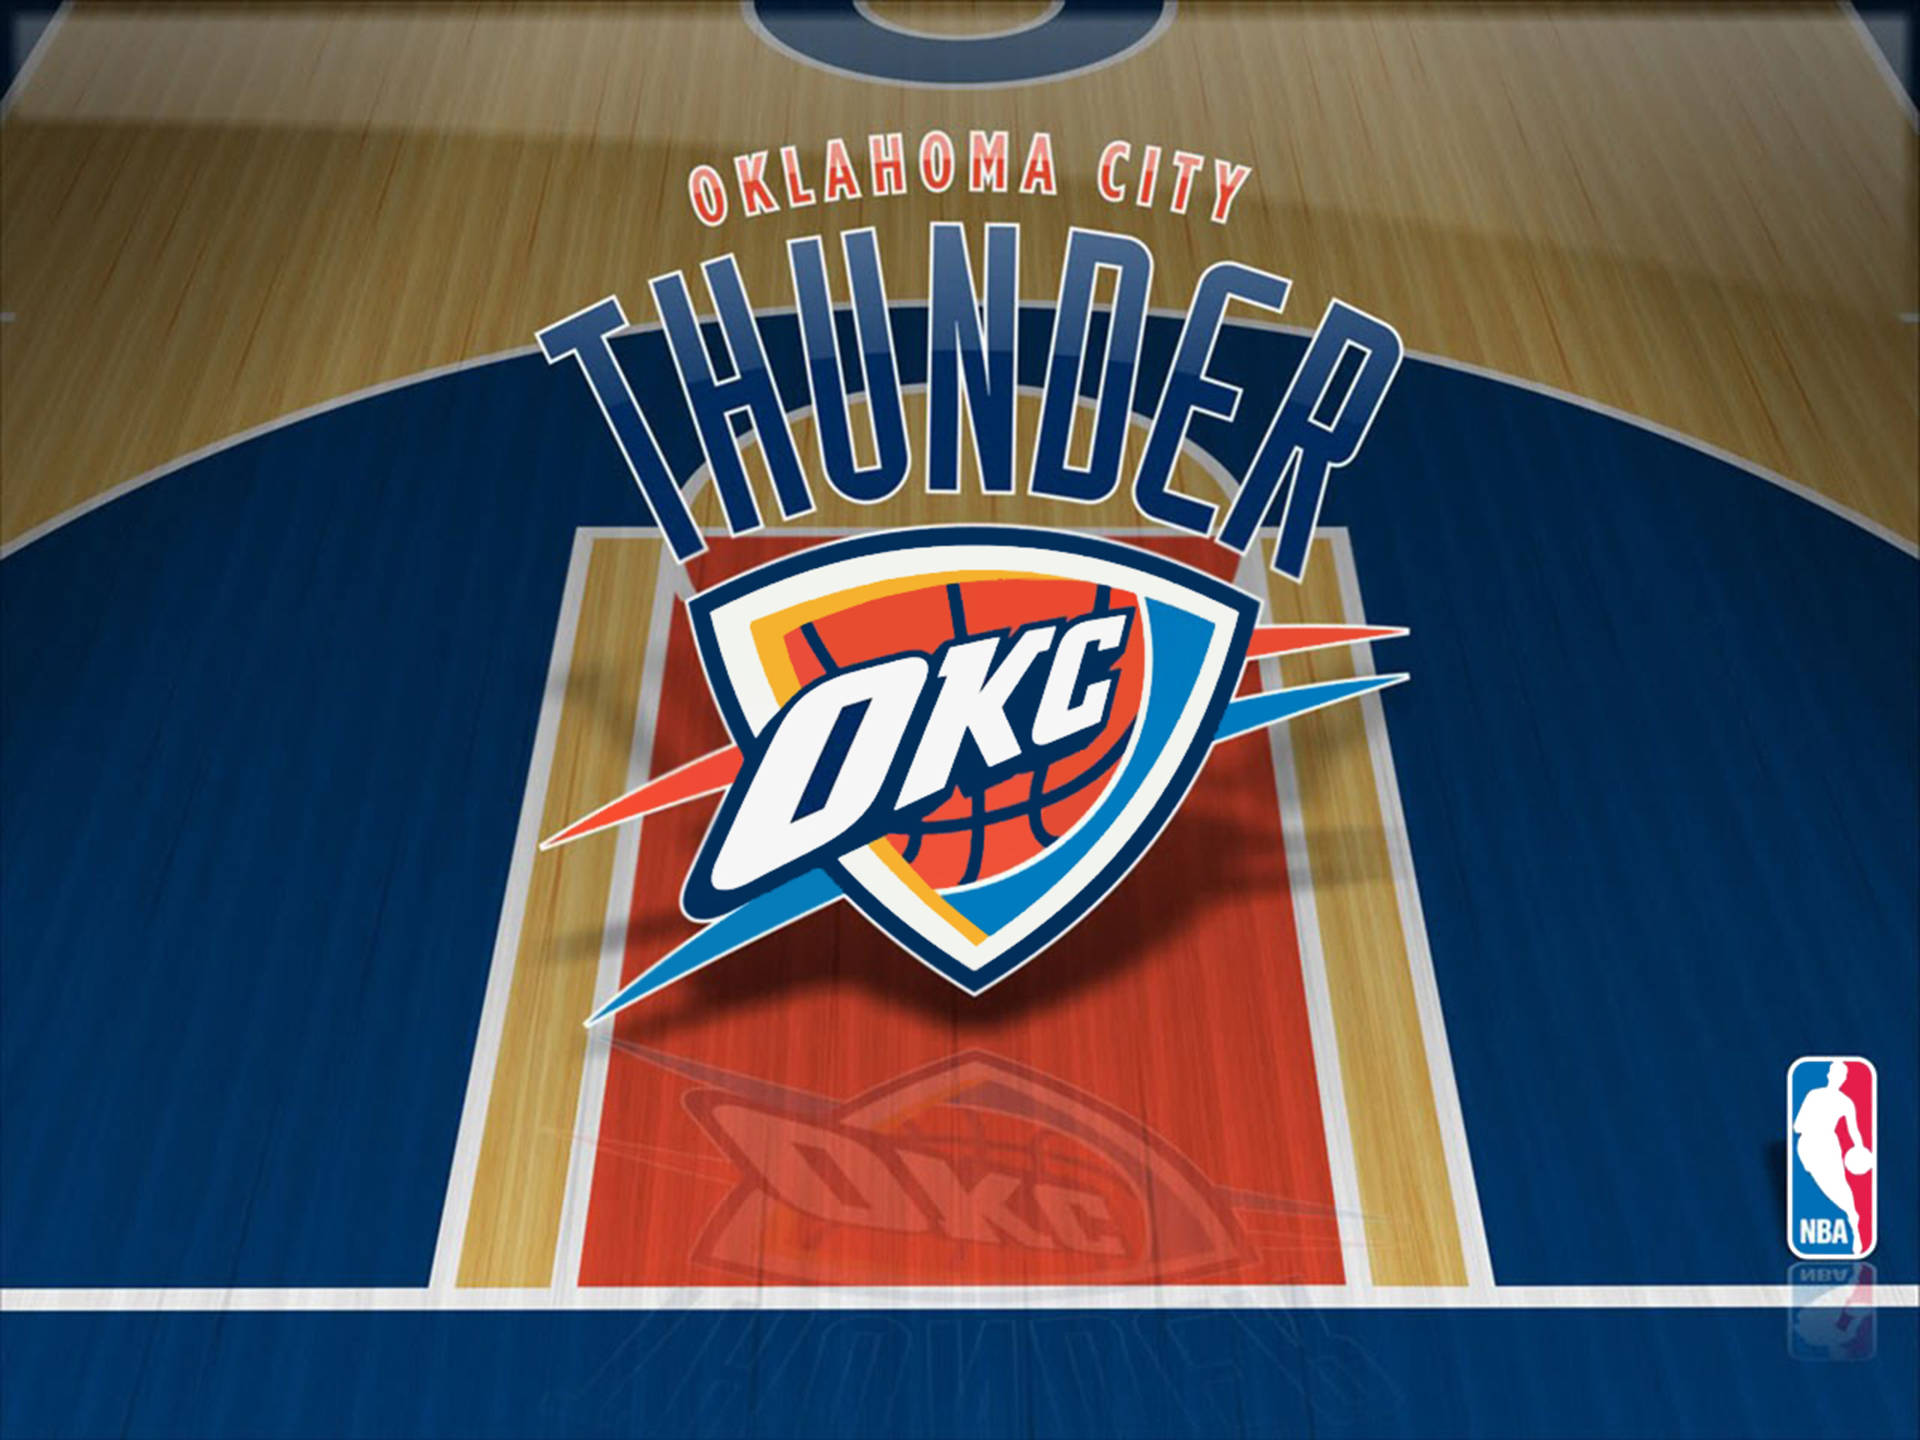 Oklahoma City Thunder Court Illustration